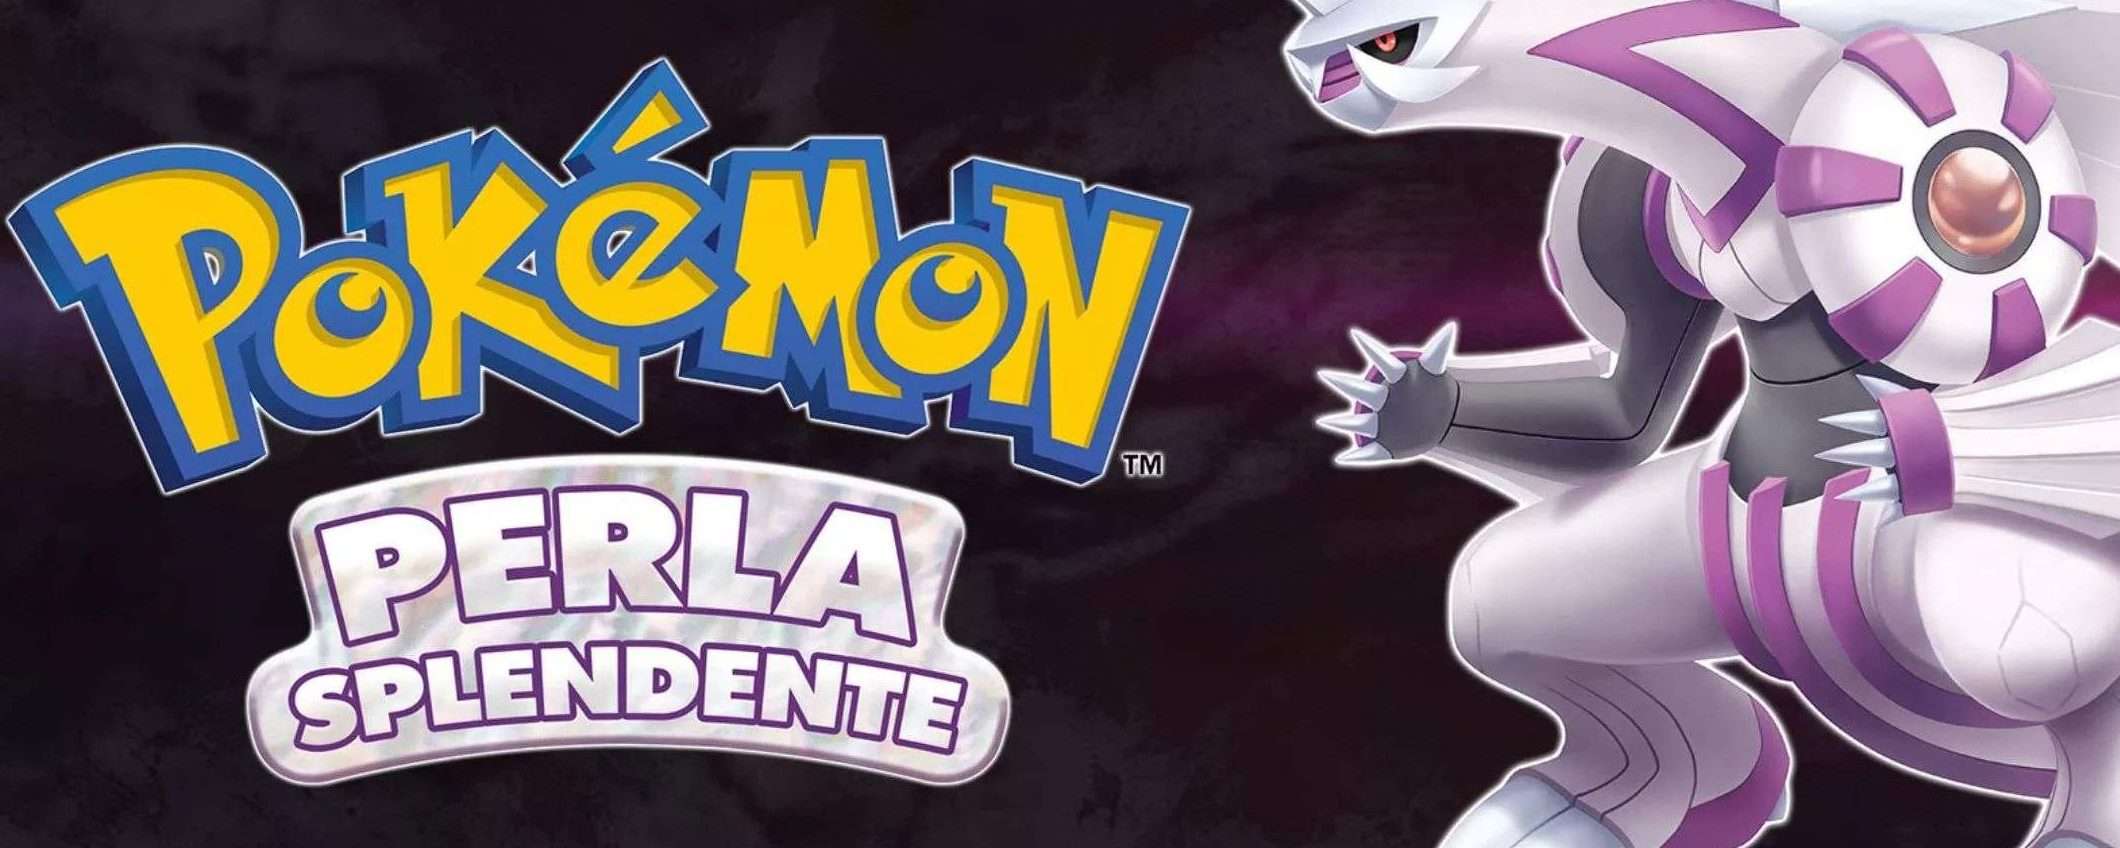 Pokémon Perla Splendente a meno di 50€ su Amazon: BEST BUY assoluto